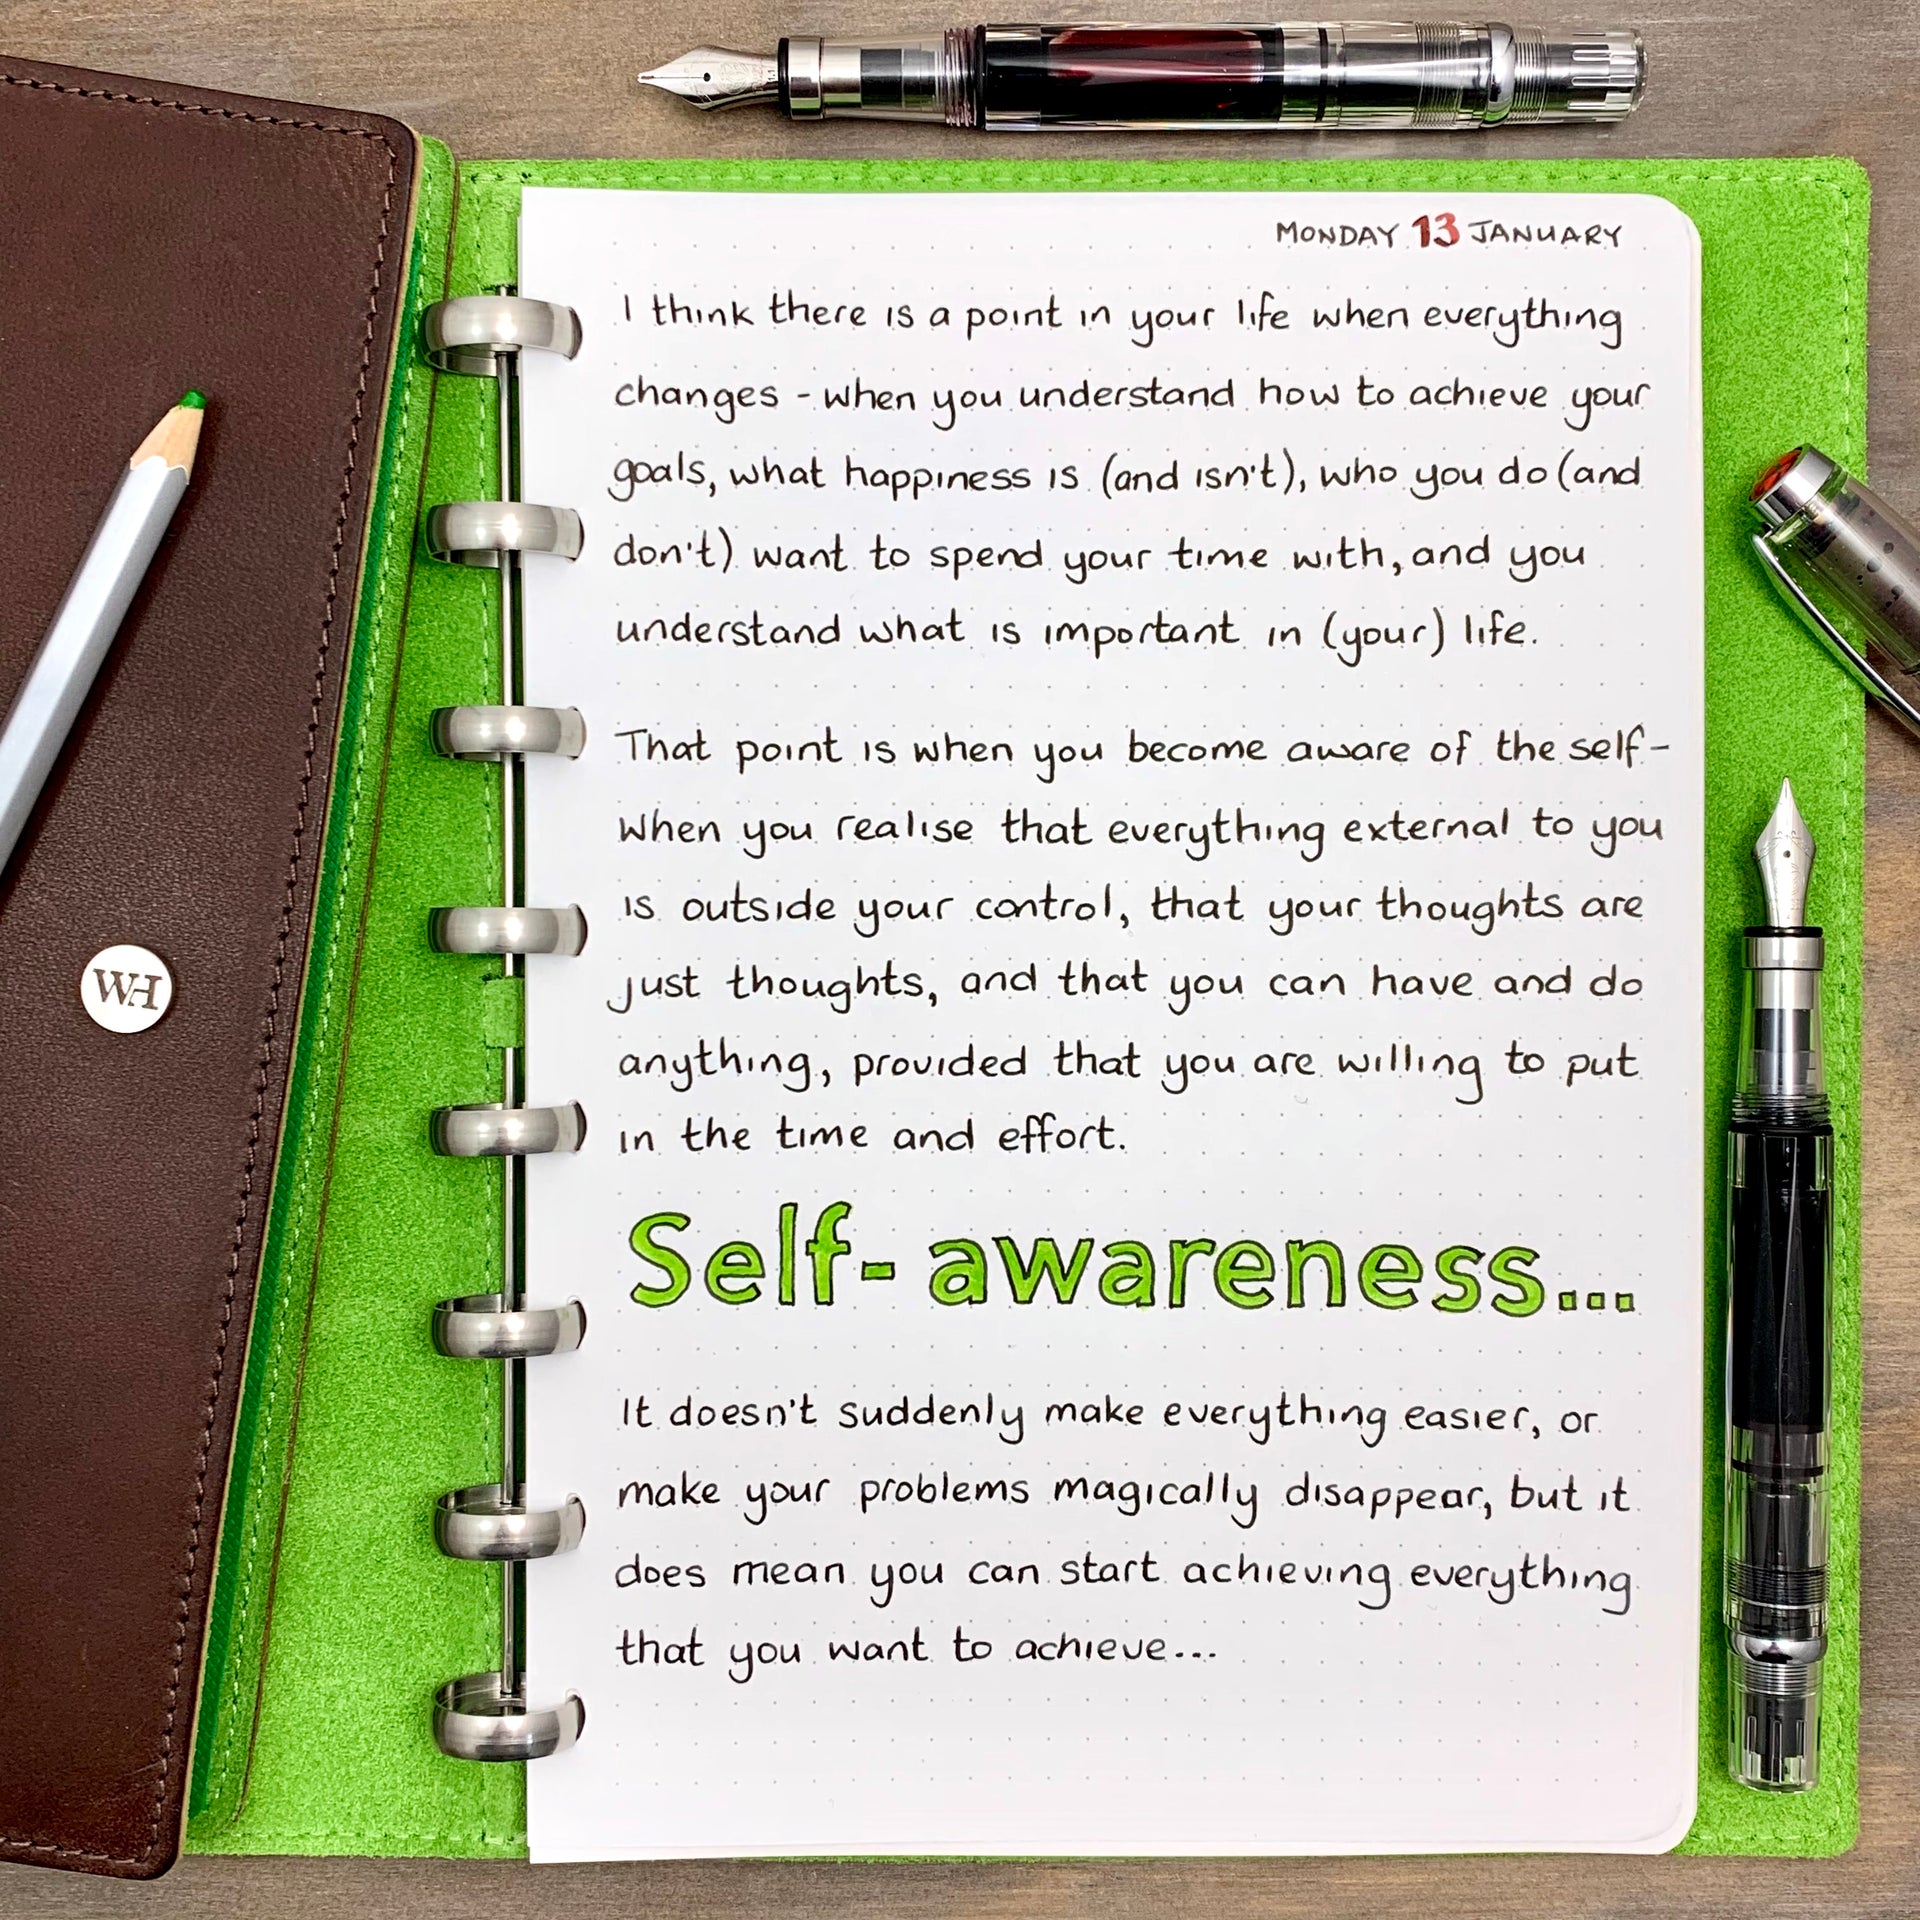 Self-Awareness...